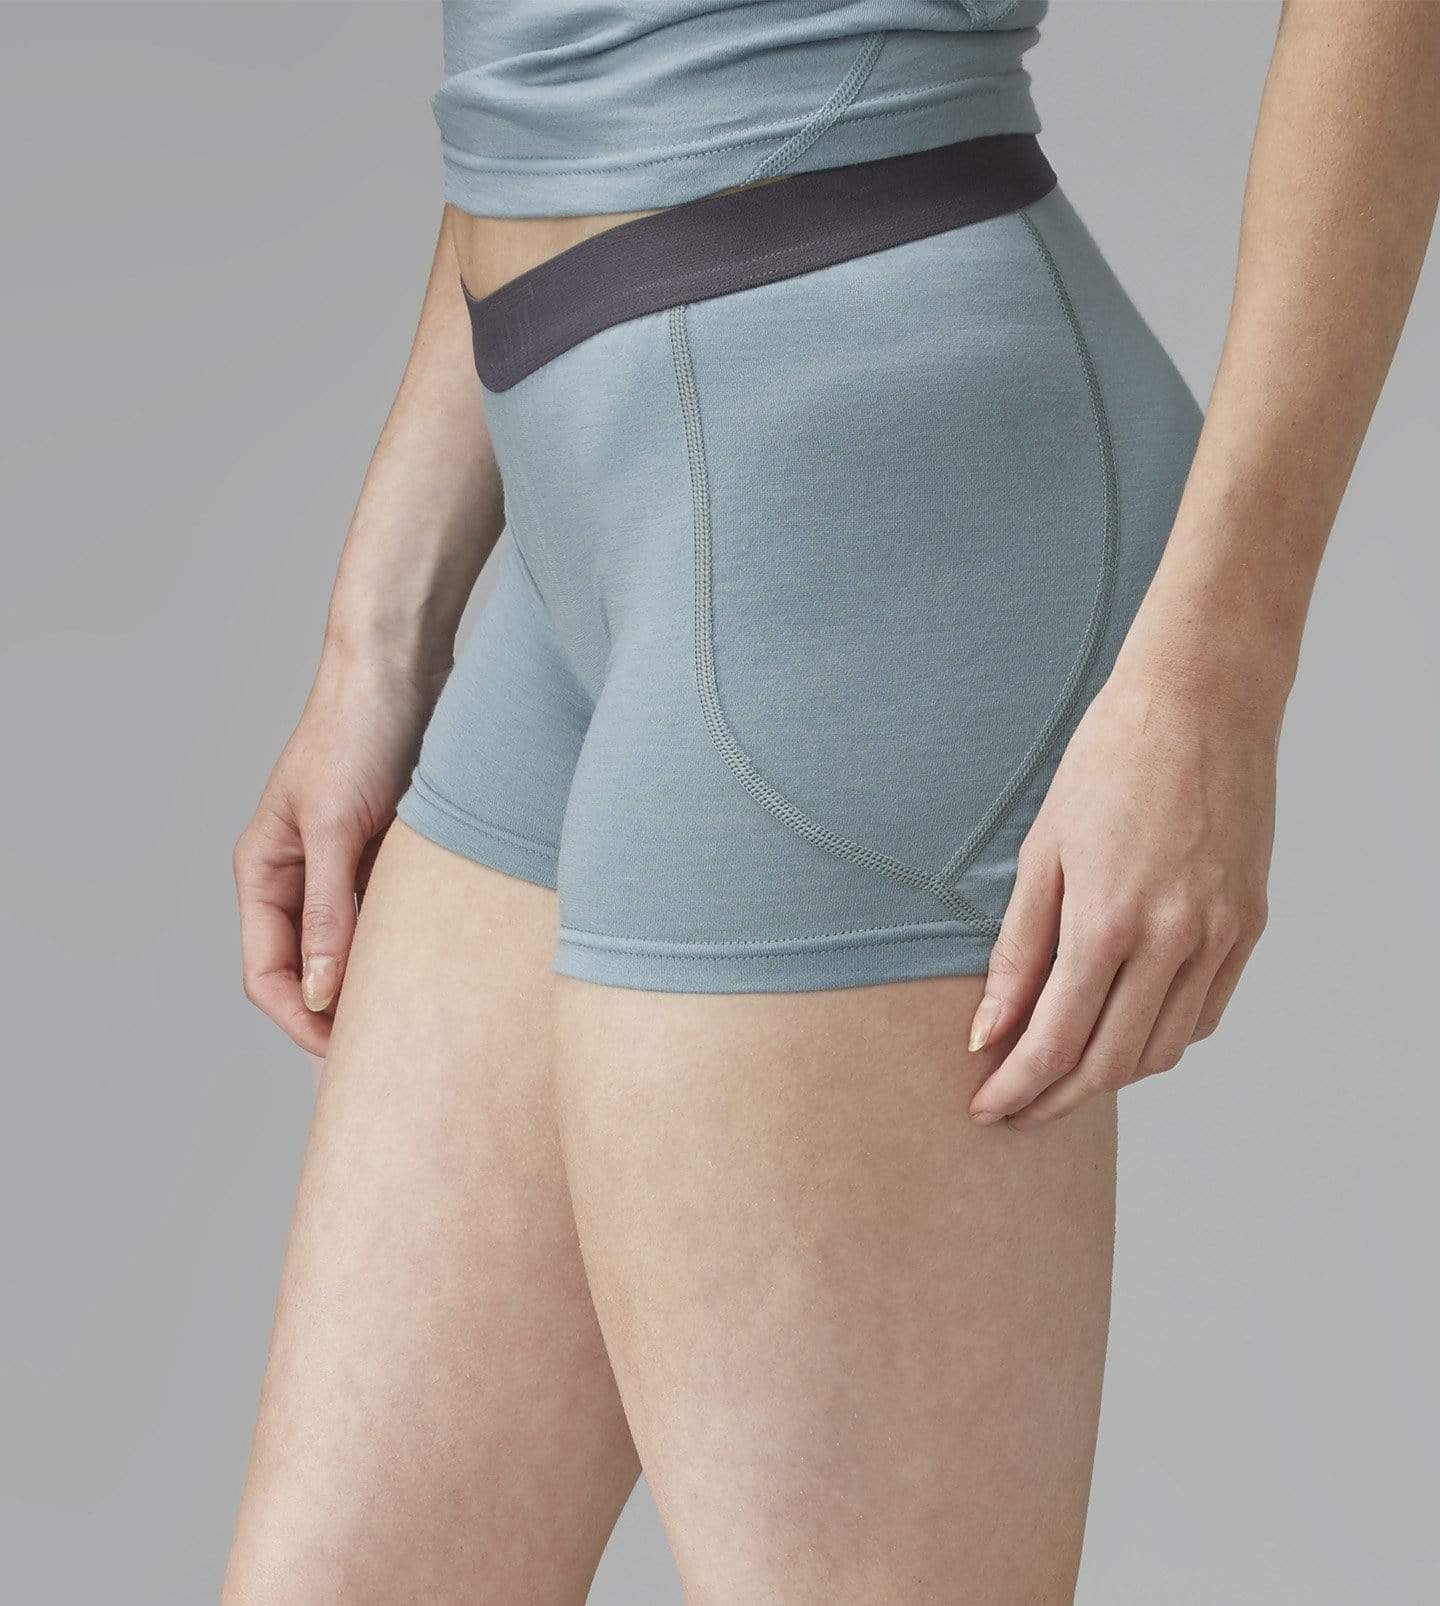 Padded Bike Underwear with Gel Padding Medium Size (M) - Adsports NZ